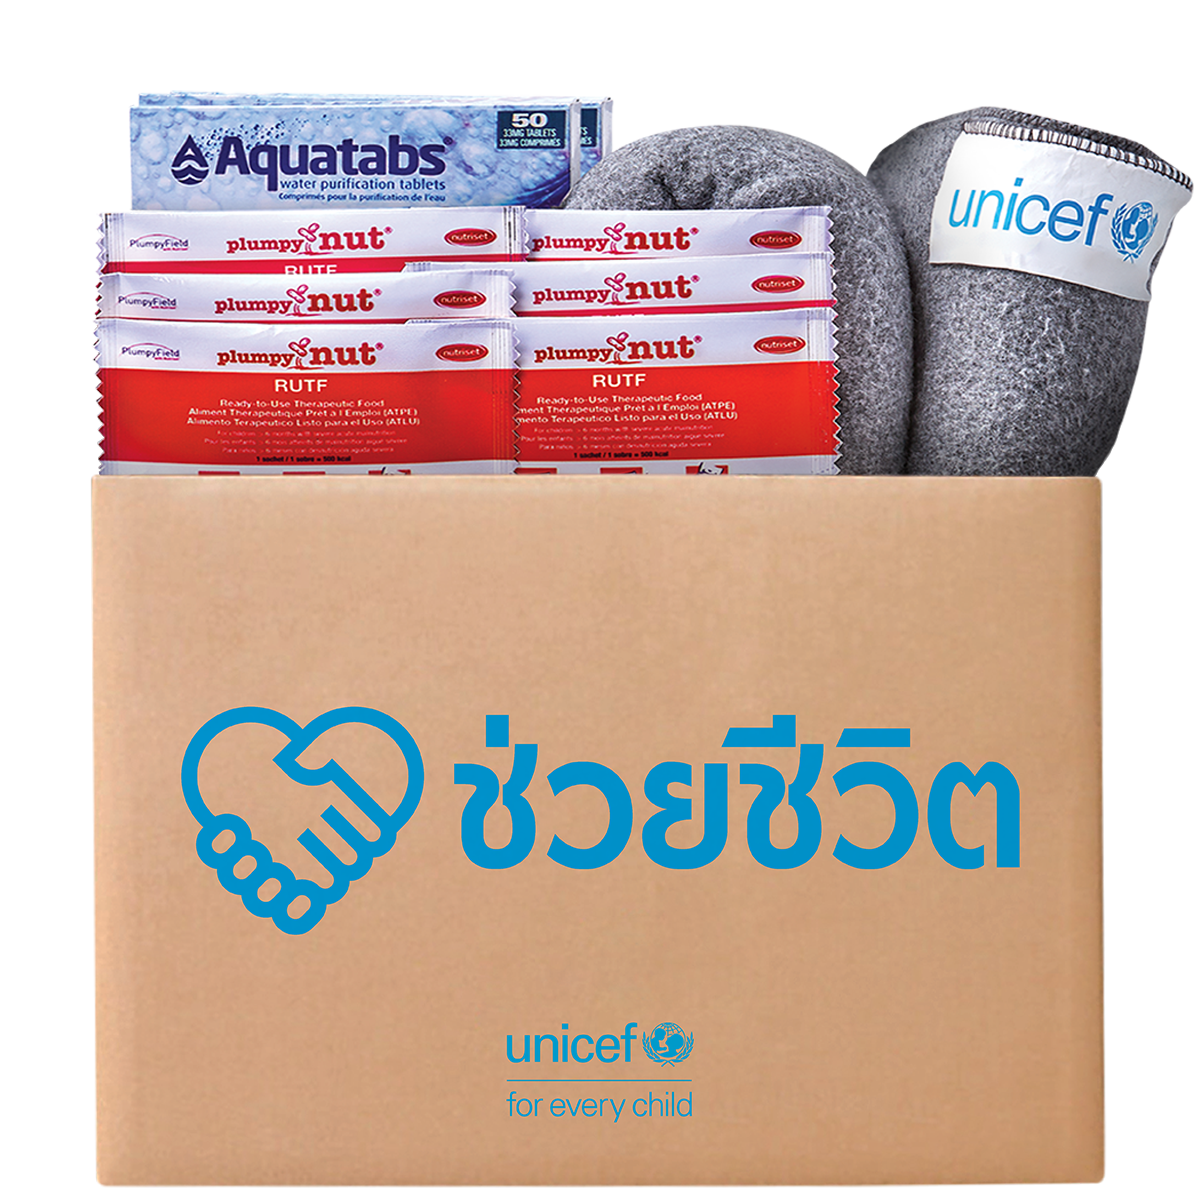 UNICEF Box of Life - Survival Kit